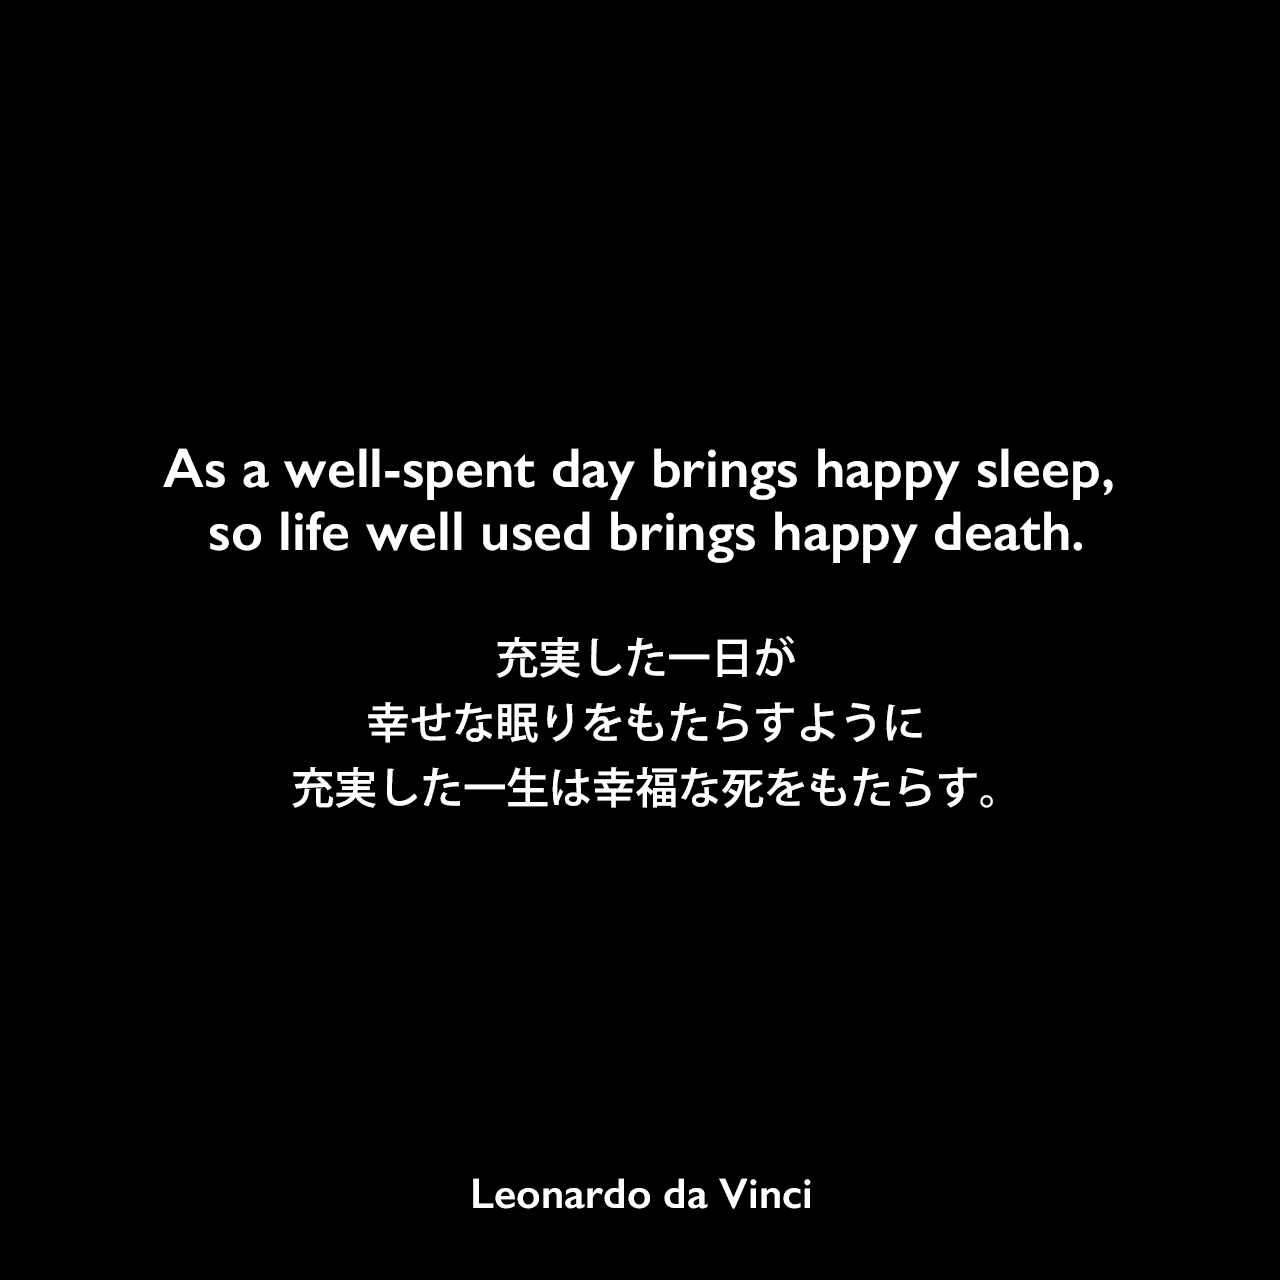 As a well-spent day brings happy sleep, so life well used brings happy death.充実した一日が幸せな眠りをもたらすように、充実した一生は幸福な死をもたらす。- レオナルド・ダ・ヴィンチのノートより